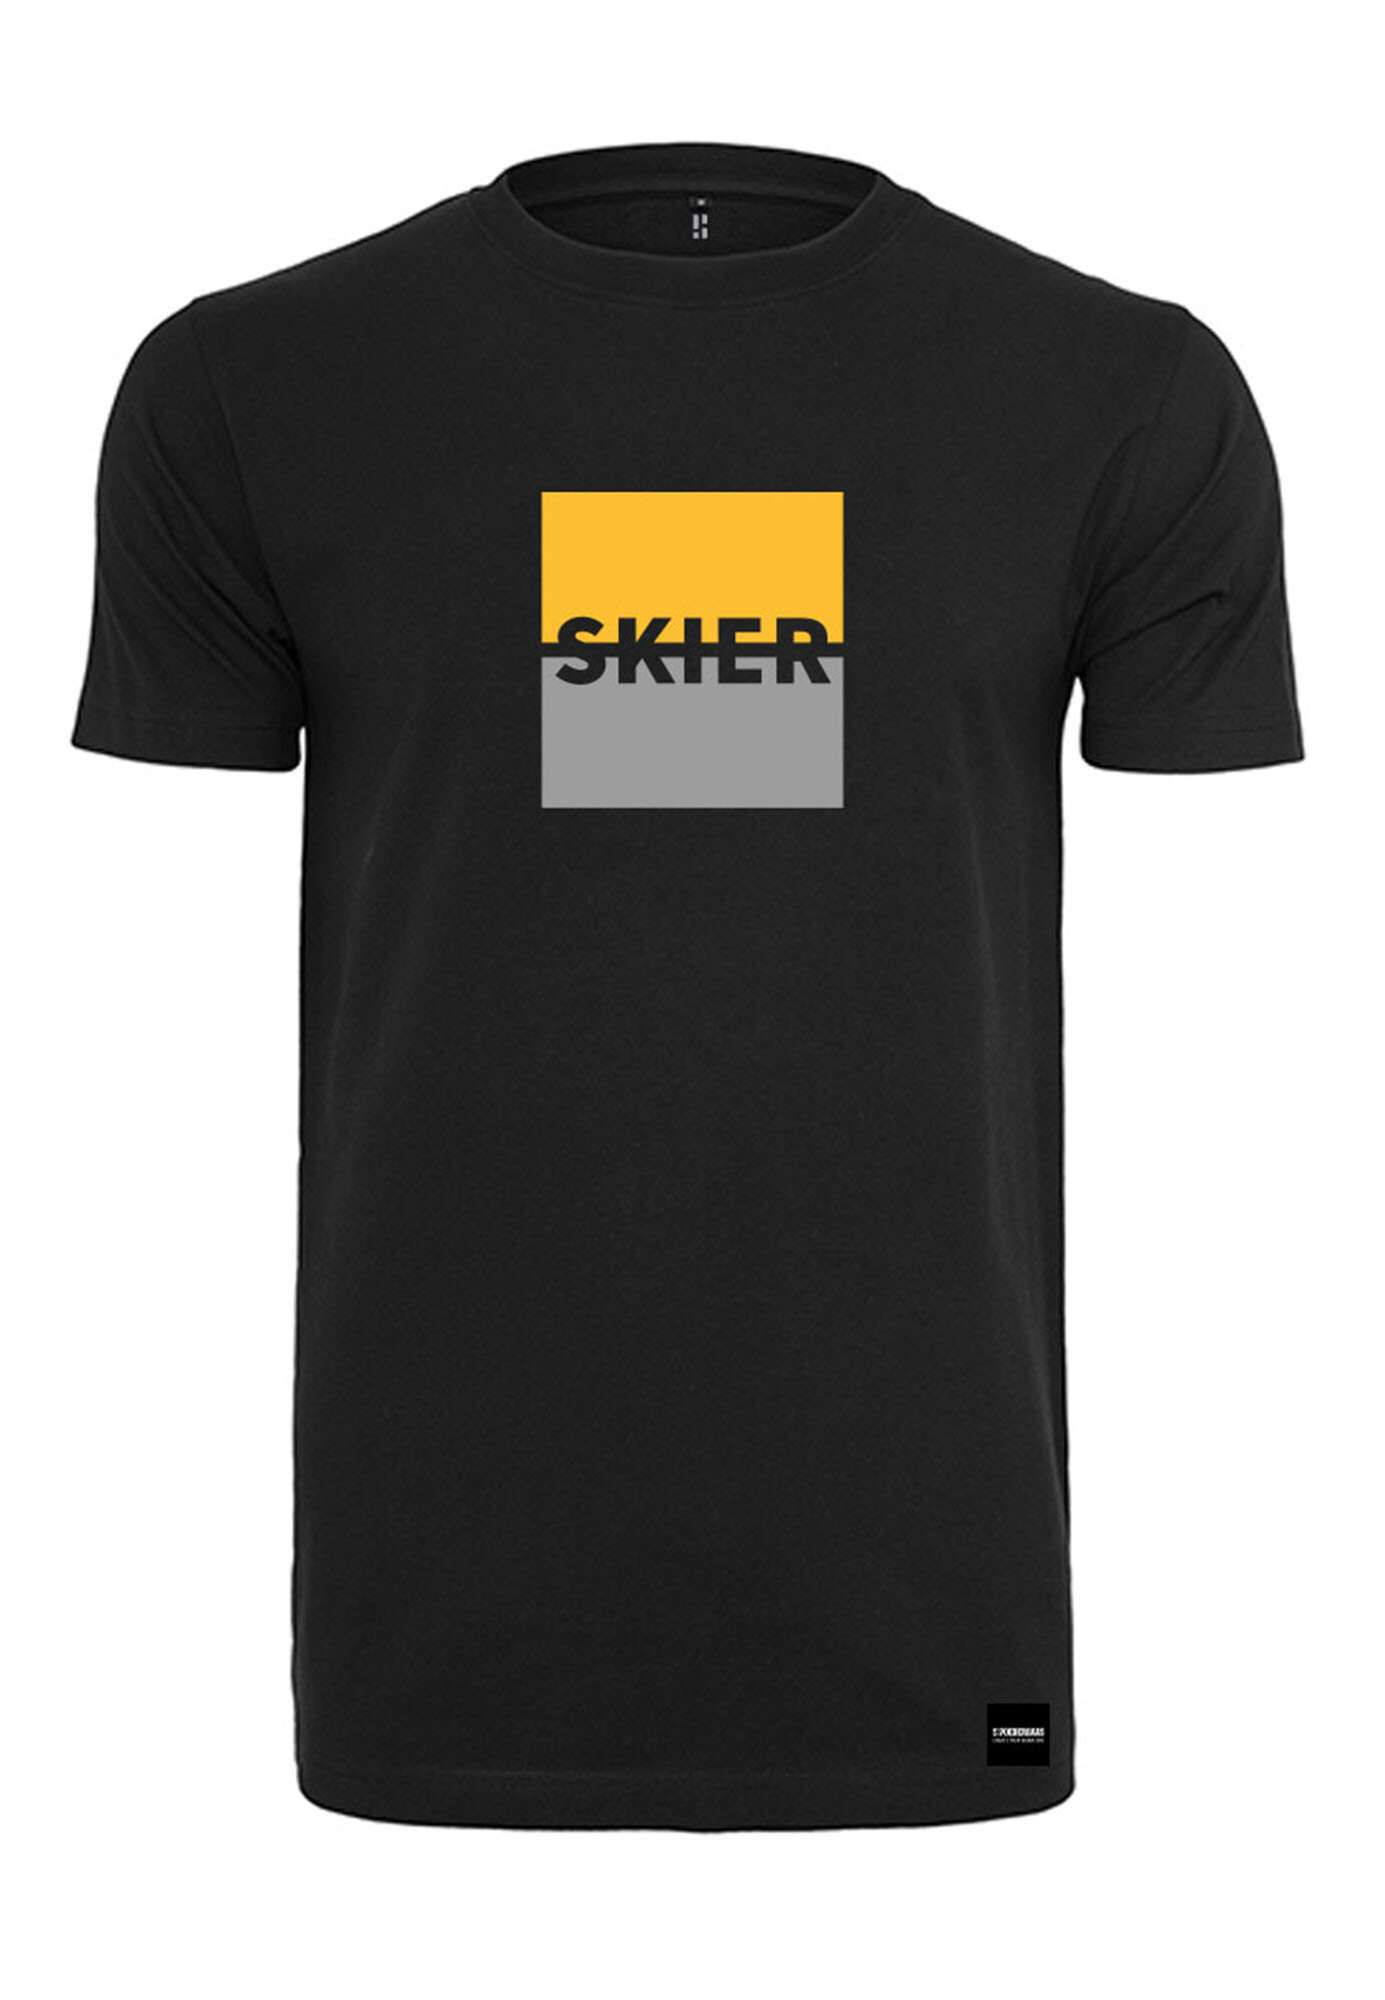 Skier. Black/Yellow t-shirt